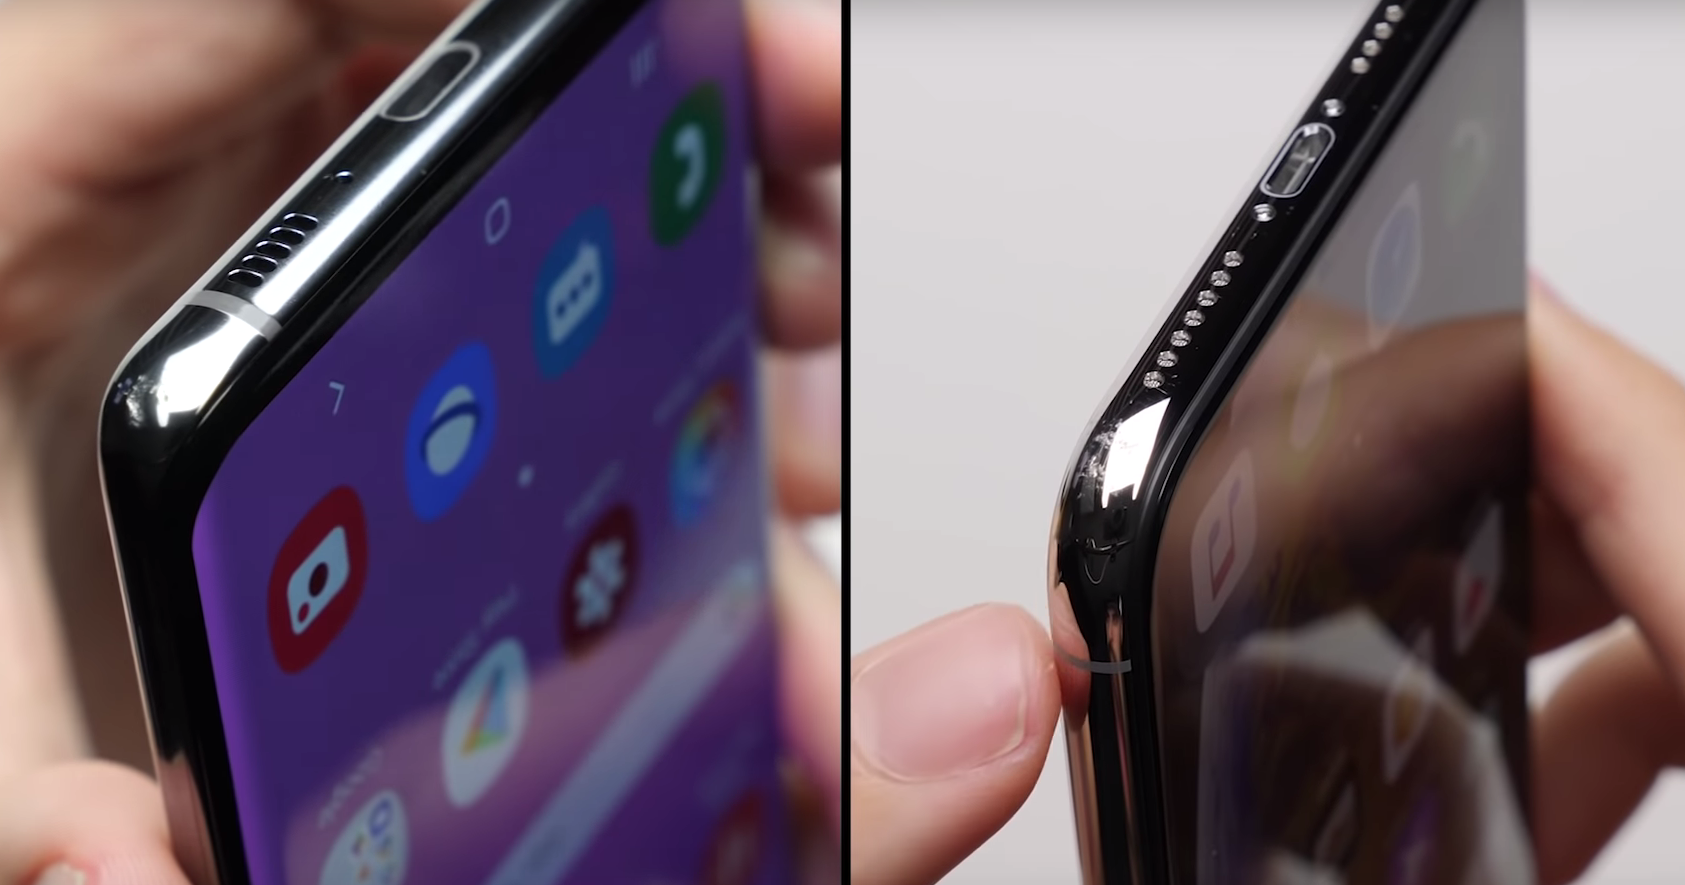 Samsung Galaxy S10+ против Apple iPhone XS Max: дроп-тест